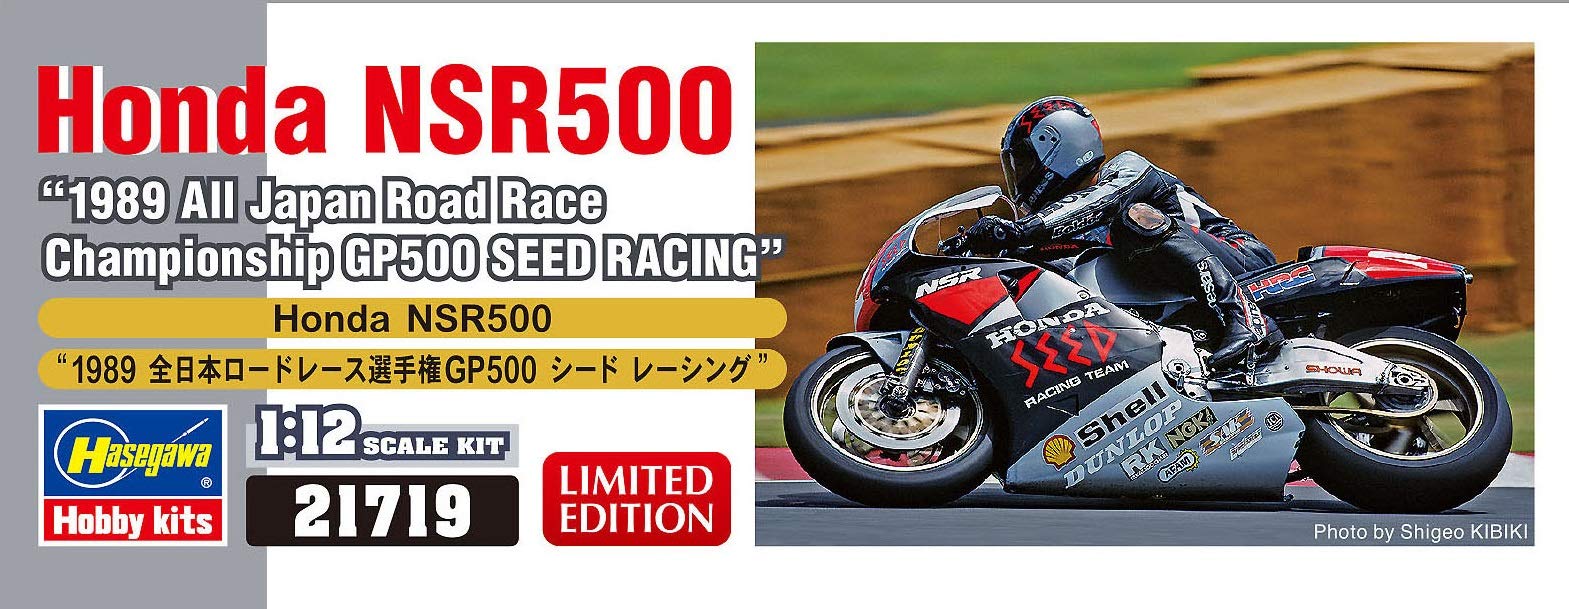 Hasegawa 21719 Honda Nsr500 1989 All Japan Road Race Championship Gp500 Seed Racing 1/12 Plastic Kit